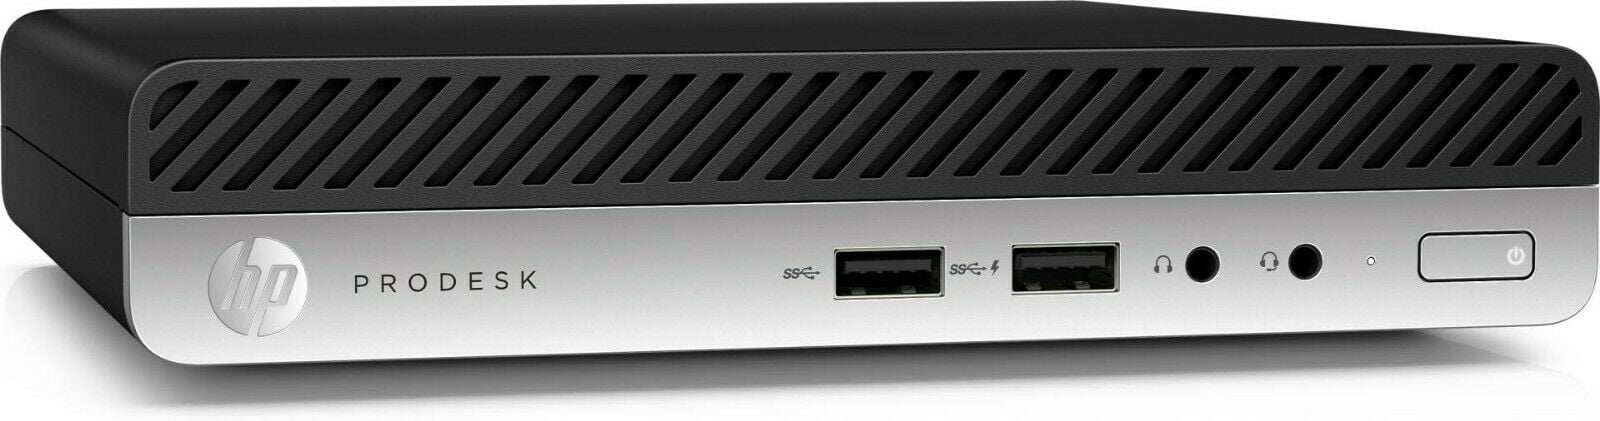 HP ProDesk 400 G5 Mini Mini Desktop Desktop, Intel 9th Gen Core i5